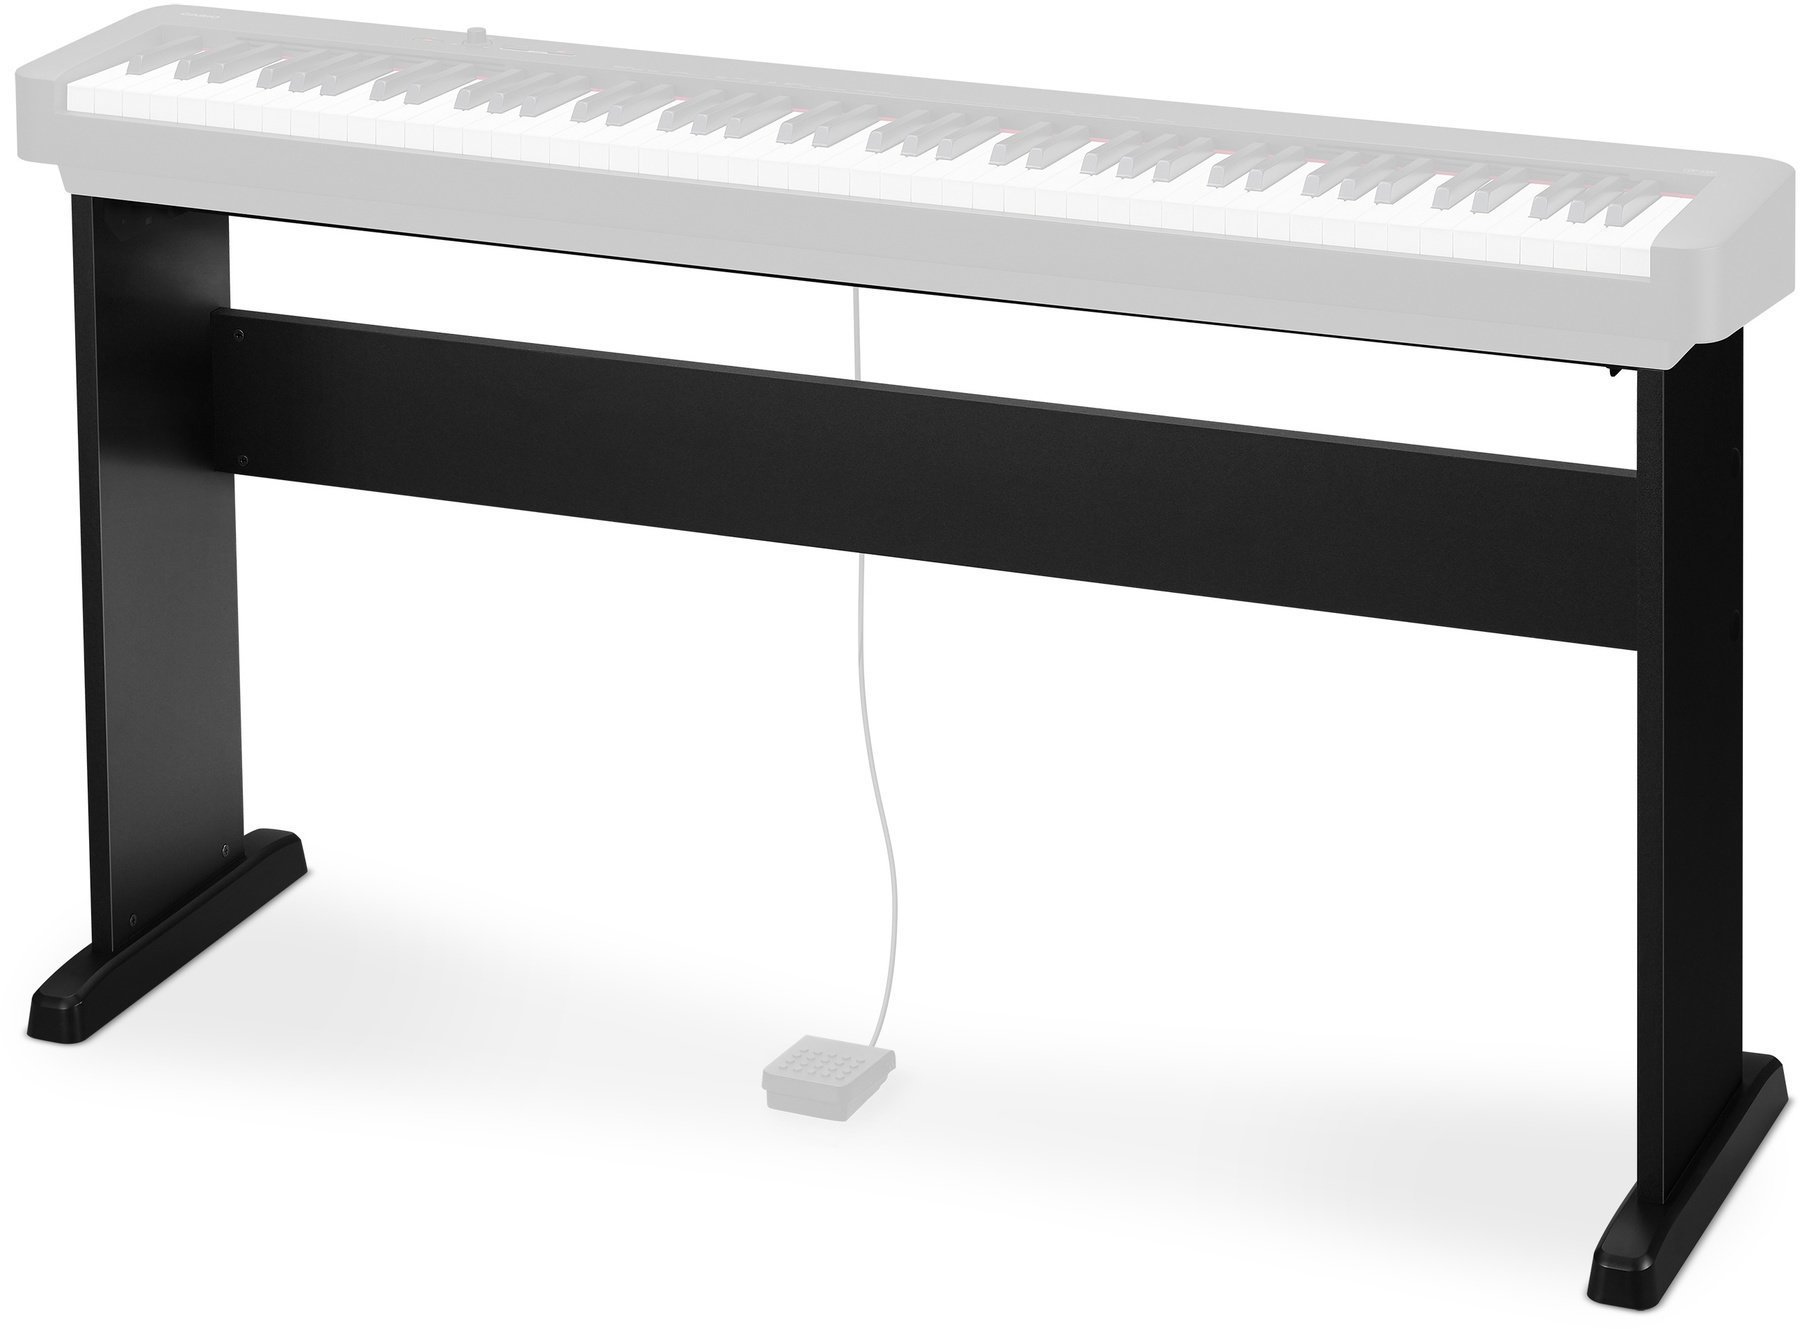 Dřevěný klávesový stojan
 Casio CS-46 P Černá